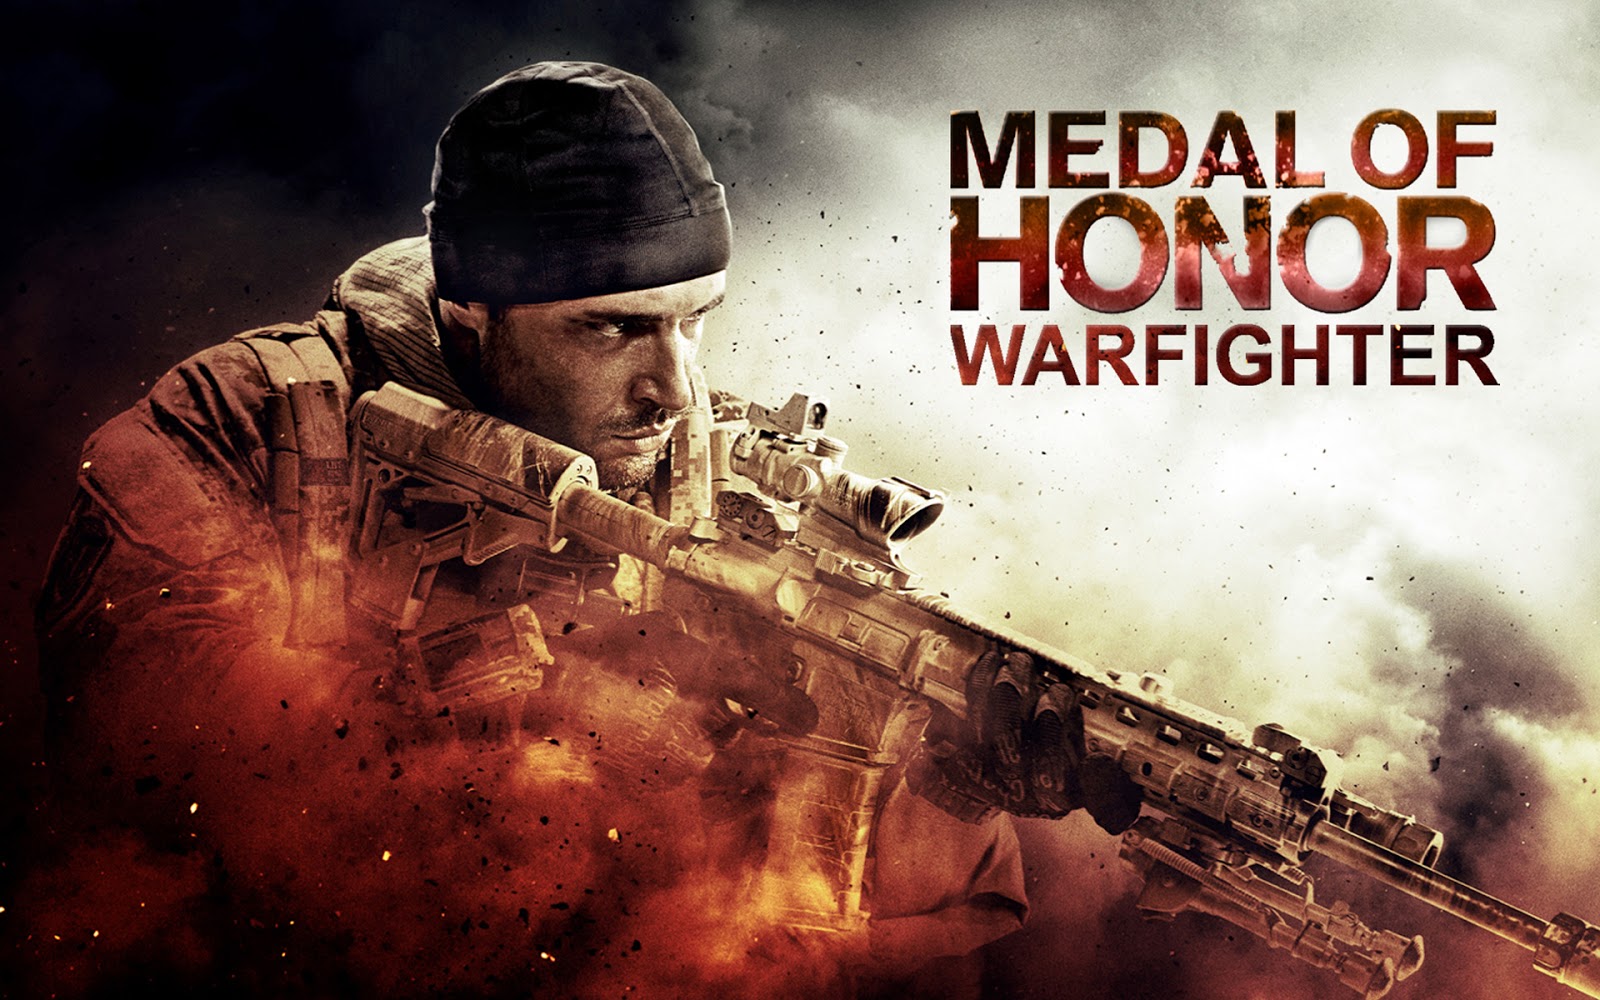 http://1.bp.blogspot.com/-VYkLs9tEOis/UWGvMEtKSRI/AAAAAAAAP2o/nM-QzIb5RgI/s1600/Medal+of+Honor+-+Warfighter+Wallpapers+%25285%2529.jpg